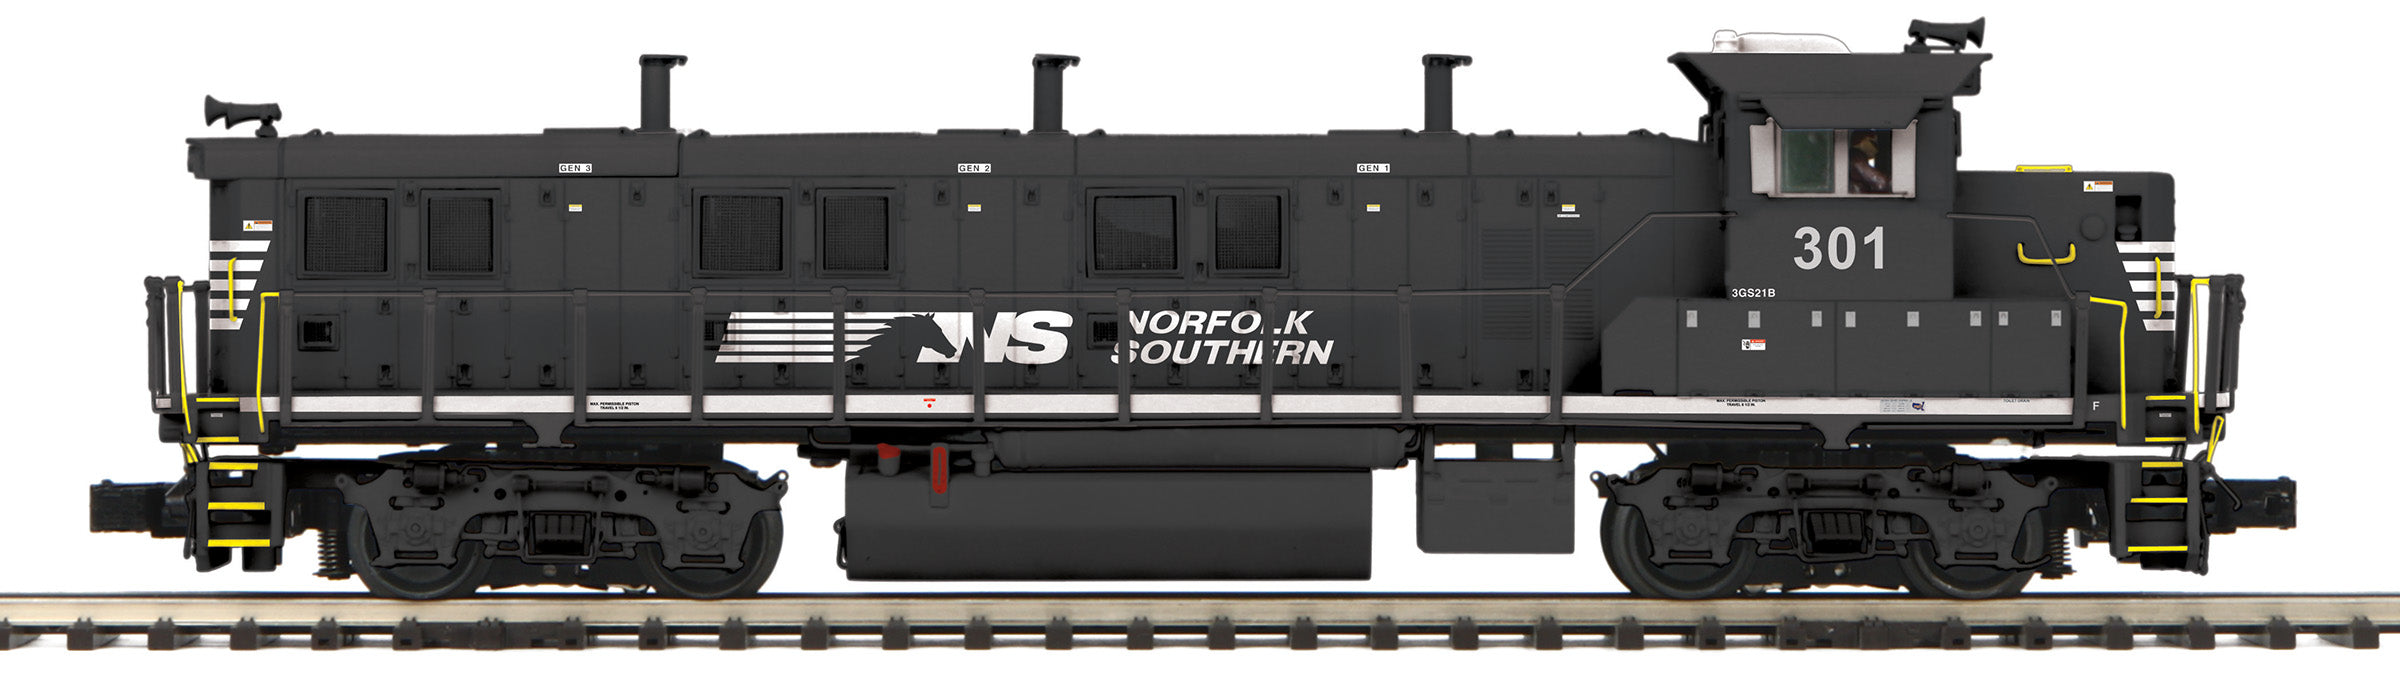 MTH 20-21663-1 - 3GS21B Genset Diesel Engine "Norfolk Southern" #301 w/ PS3 (Hi-Rail Wheels)